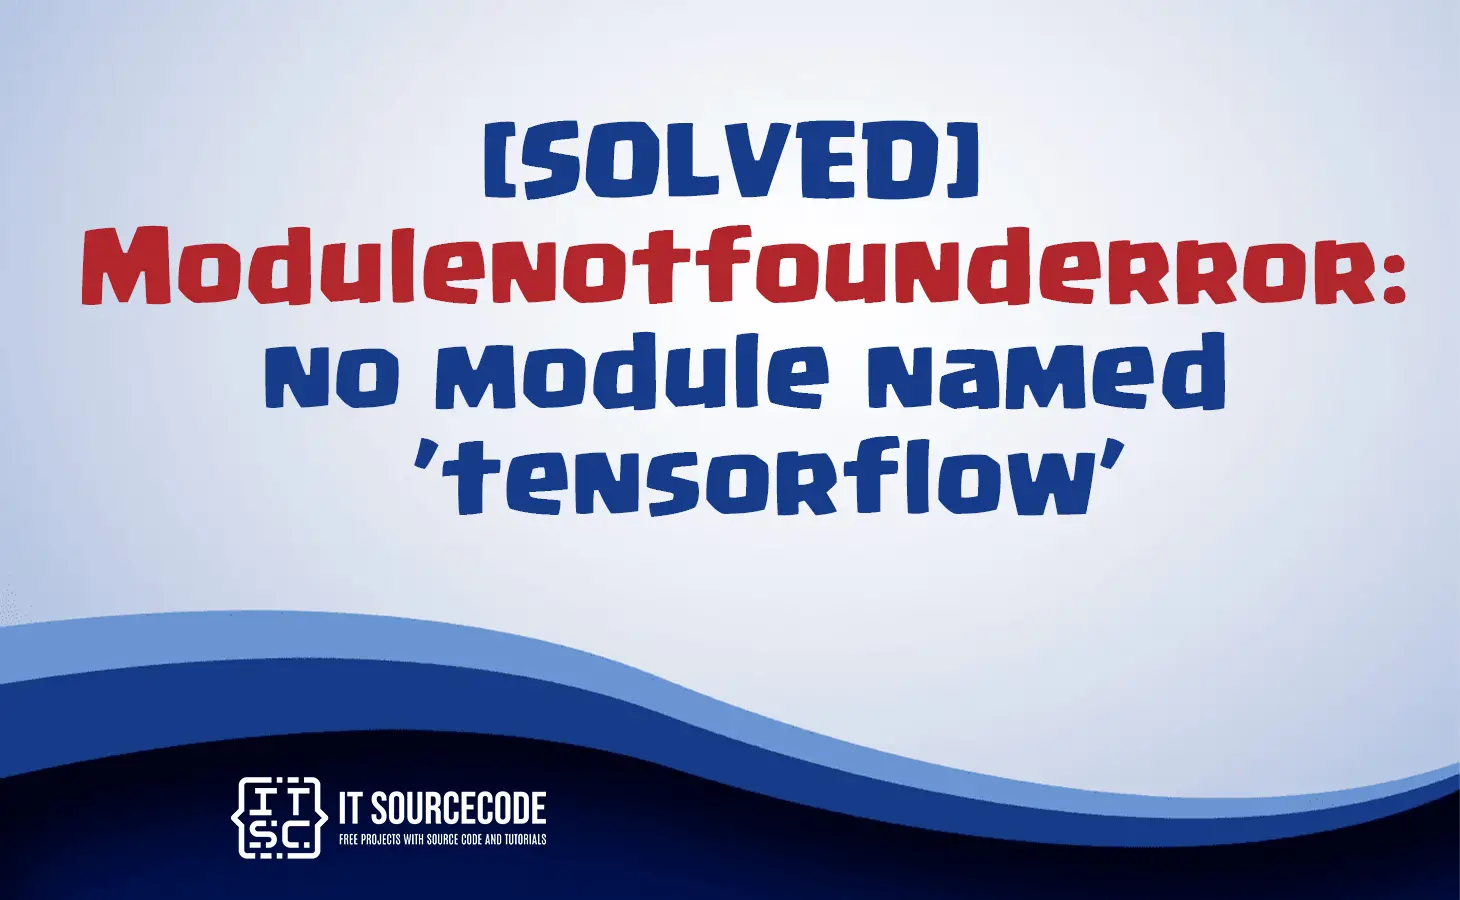 Modulenotfounderror no module named tensorflow